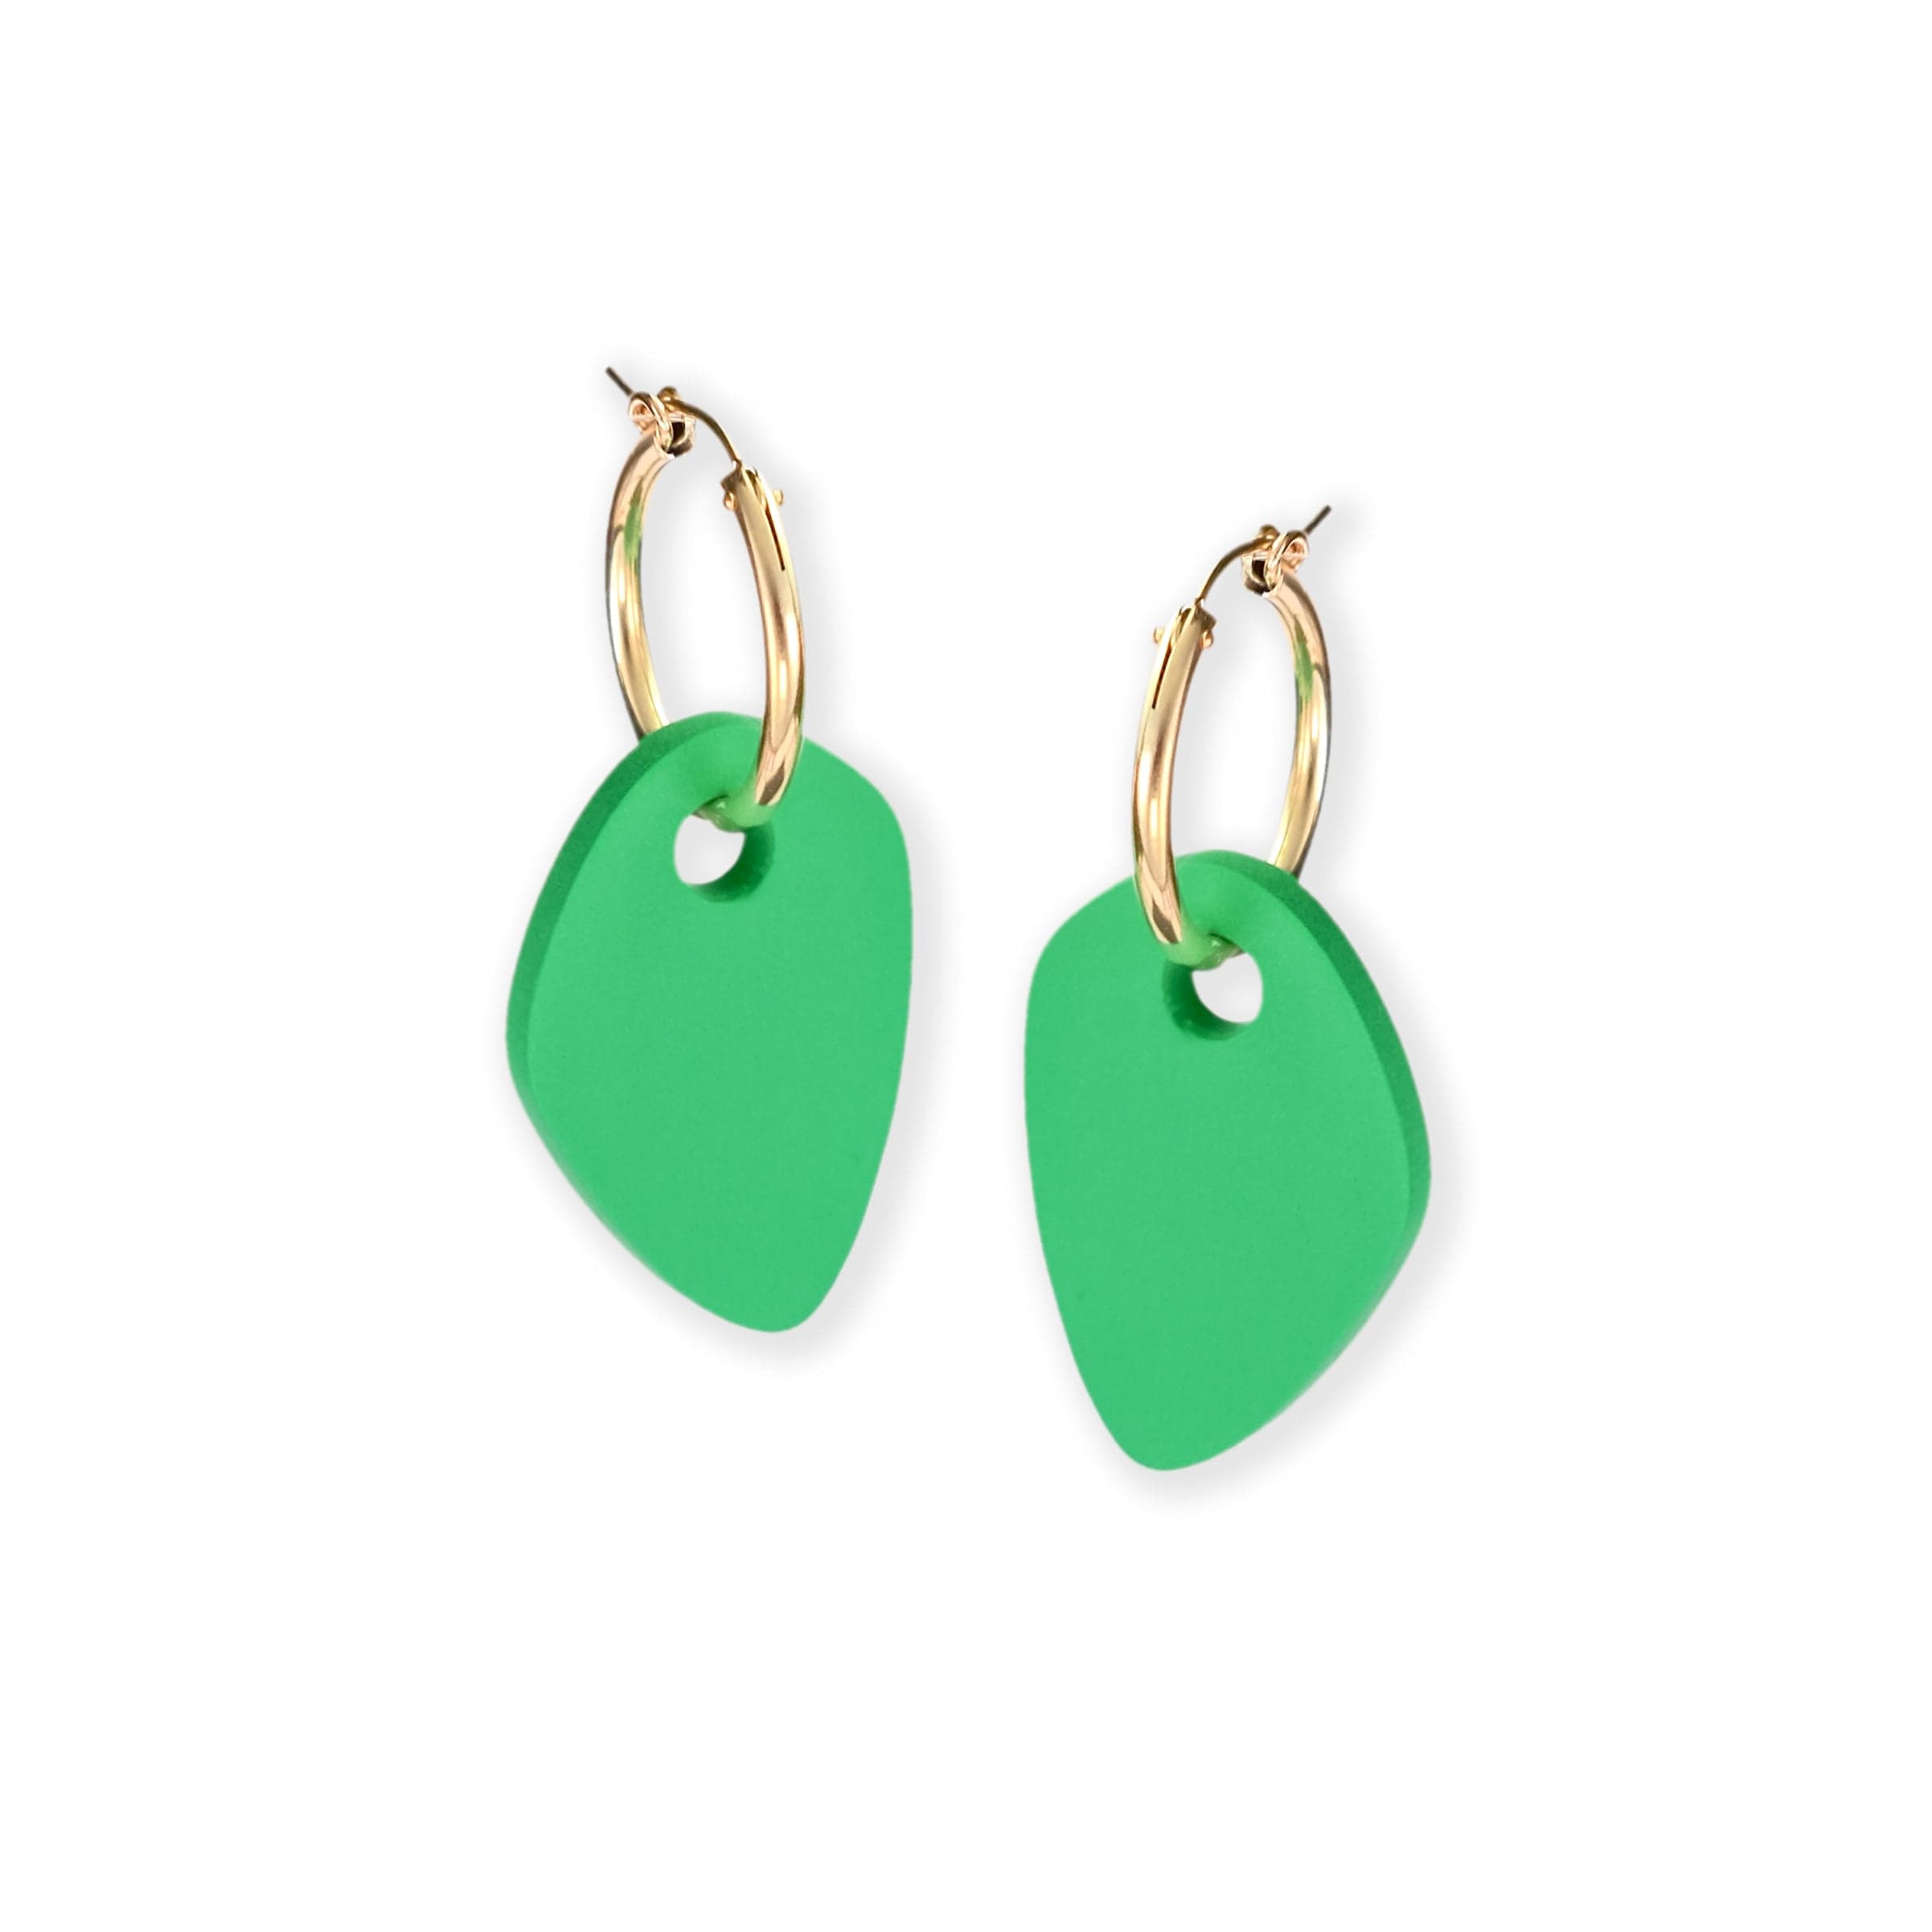 Organic shapes, hoop charm dangly earrings Calder inspired in green #color_green